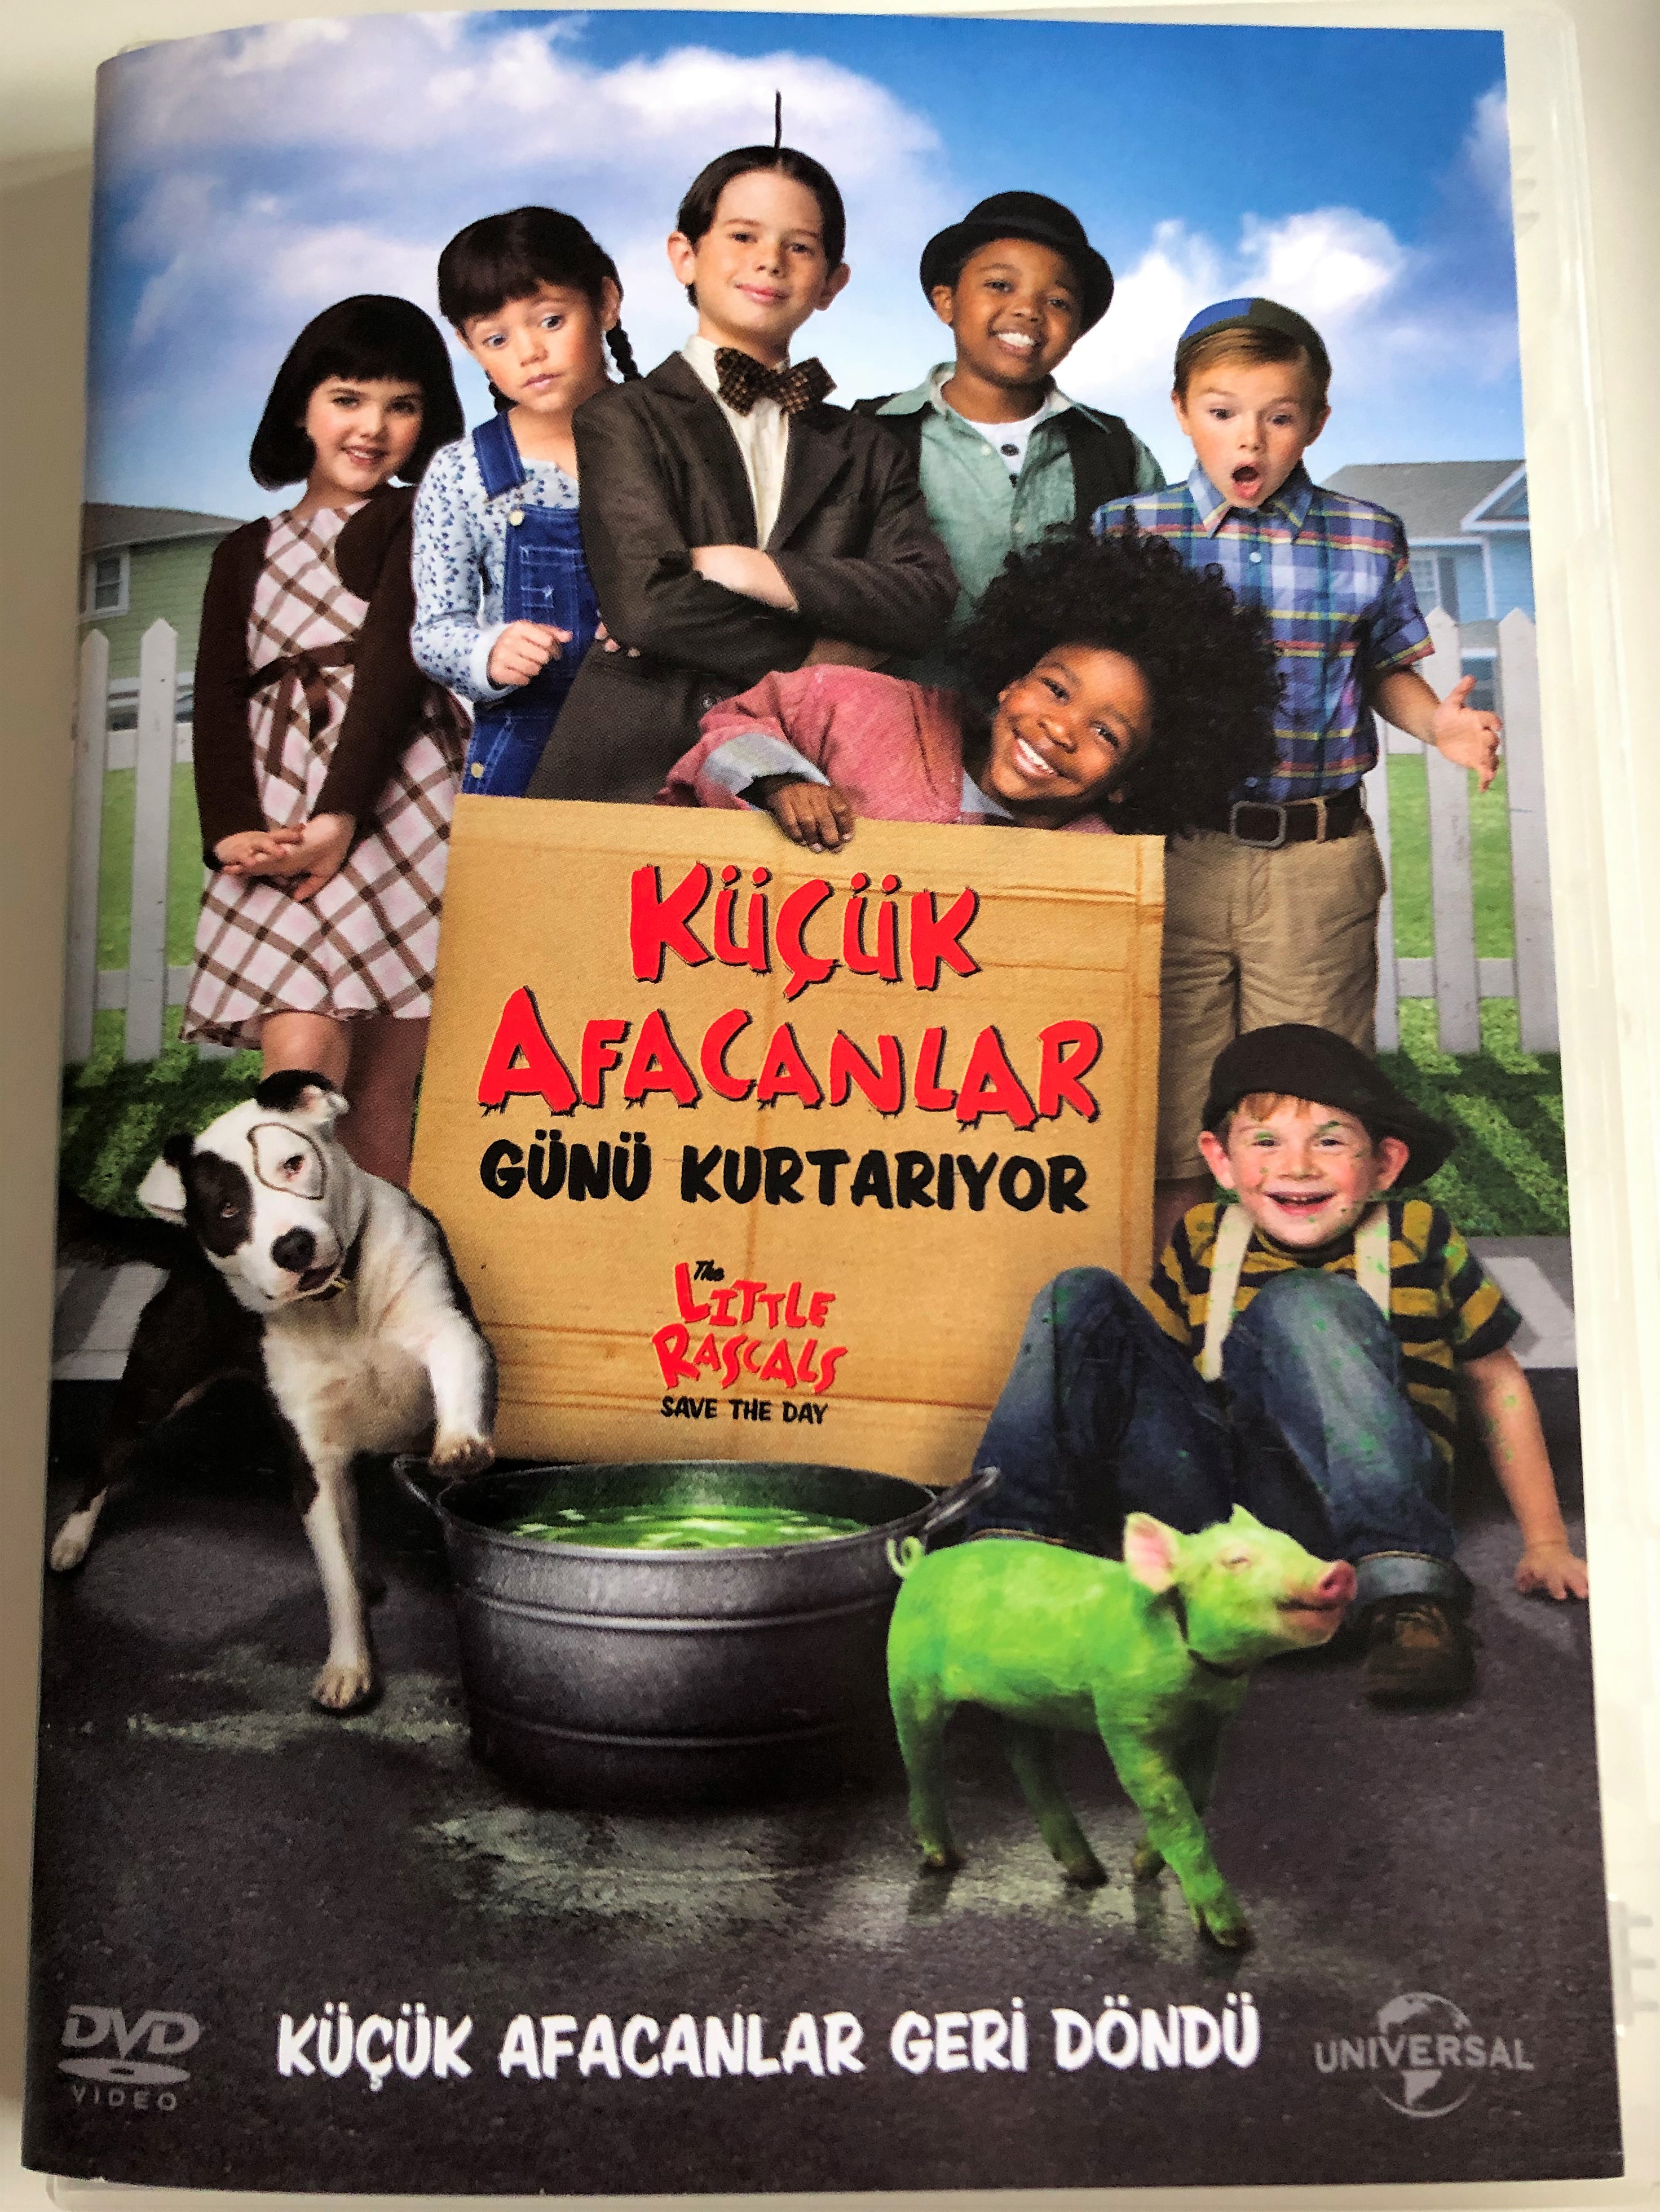 k-k-afacanlar-g-n-kurtar-yor-dvd-2014-the-little-rascals-save-the-day-directed-by-alex-zamm-1-.jpg